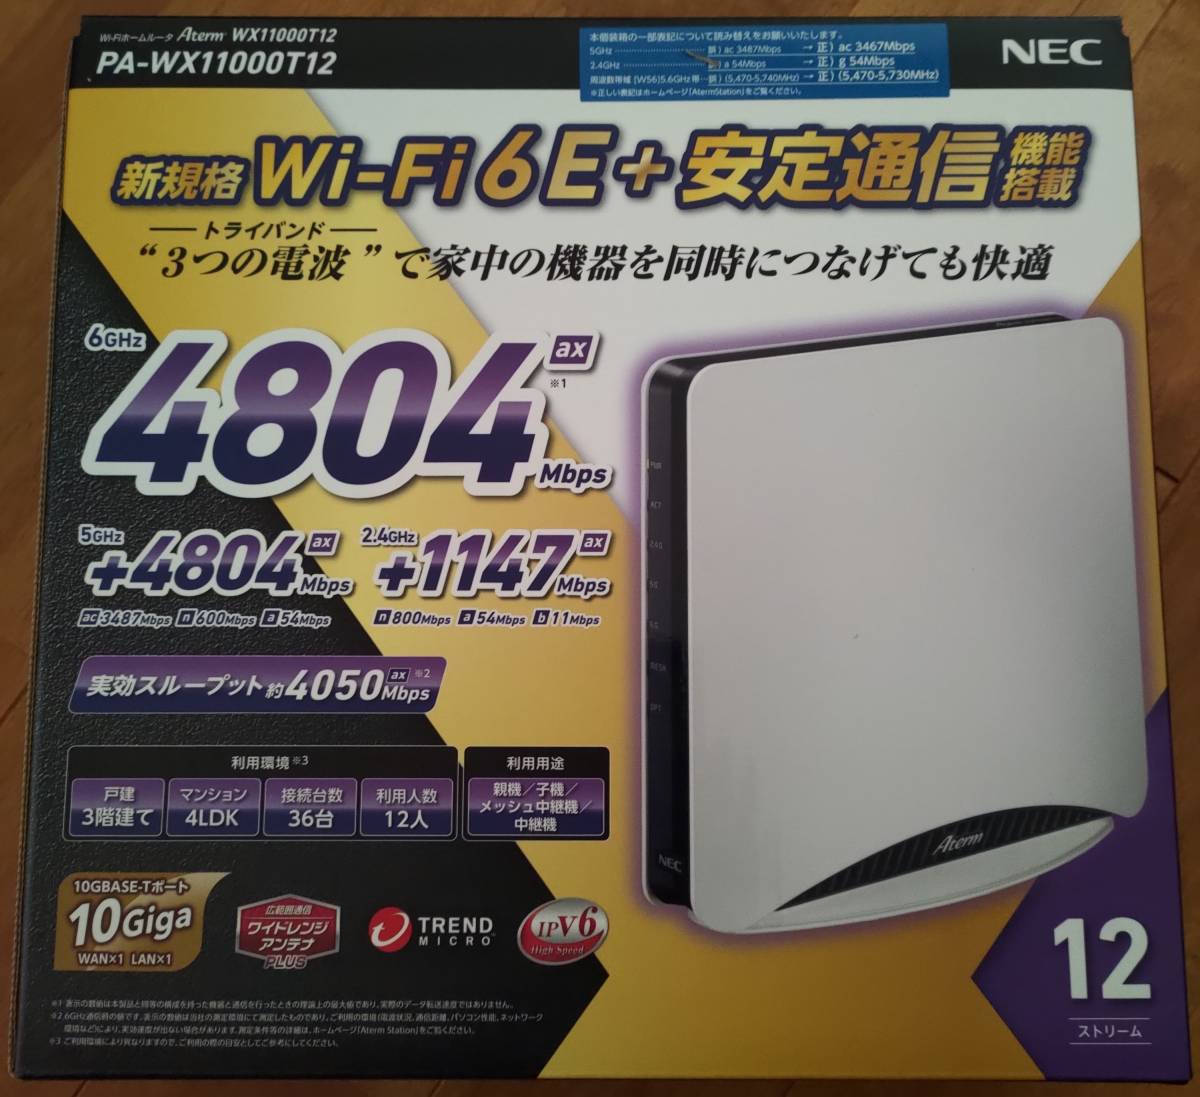 NEC Aterm WX11000T12 PA-WX11000T12 Wi-Fi 6E対応